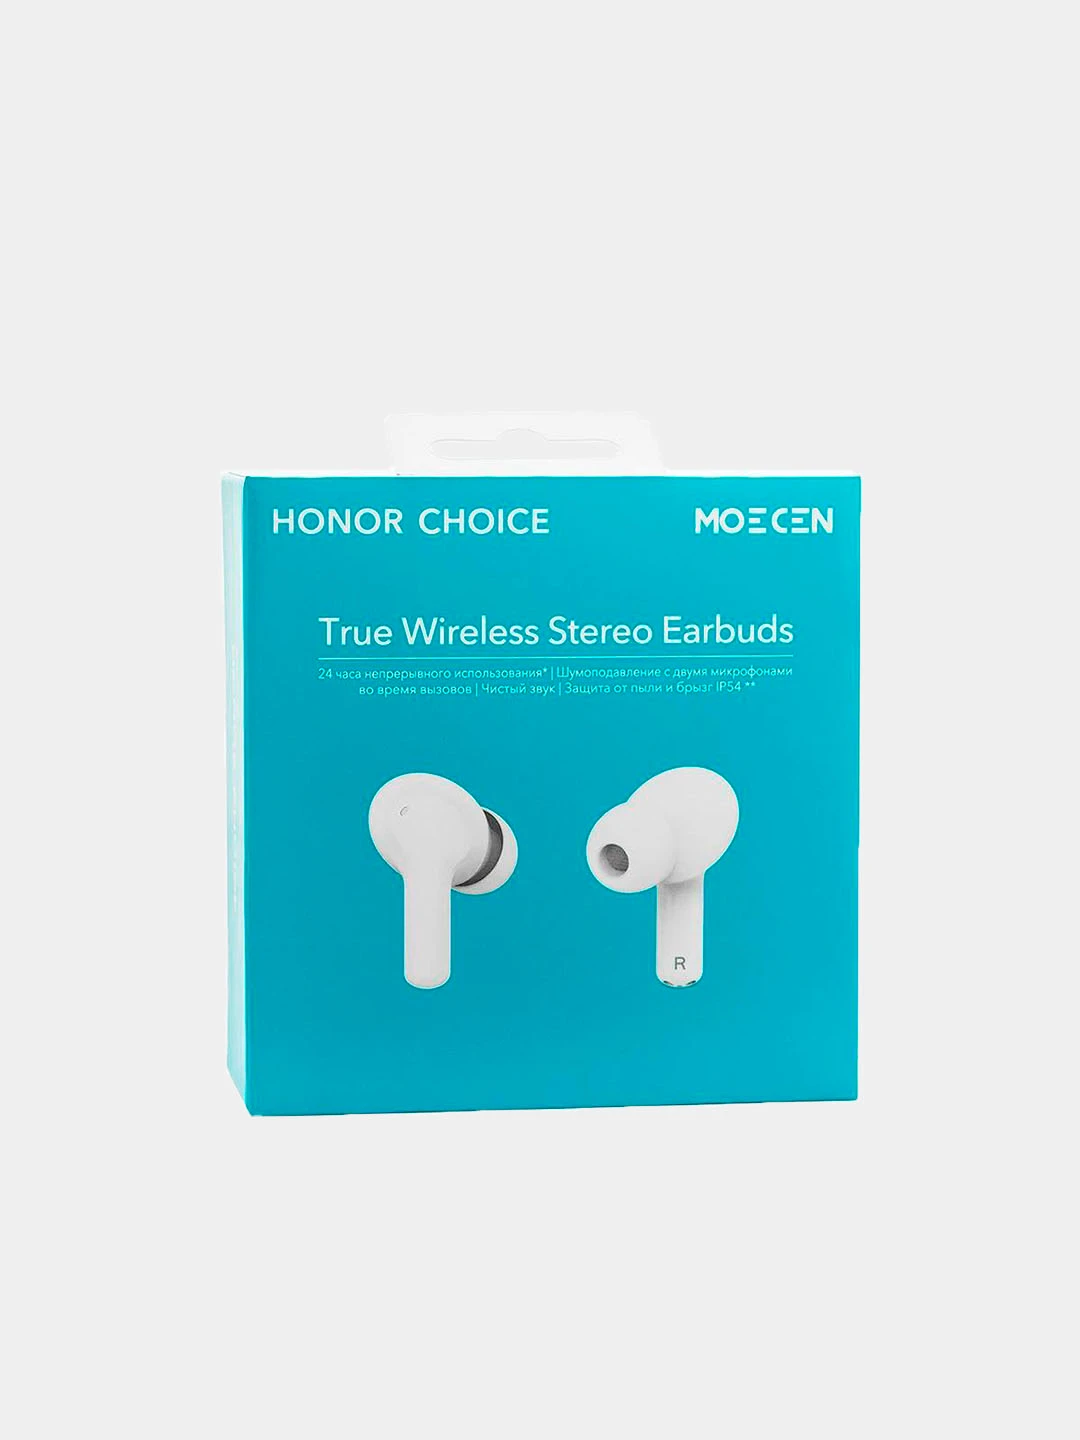 Tws ce79. Наушники Honor choice TWS. Наушники true Wireless Honor choice ce79. Наушники Honor choice true Wireless stereo Earbuds ce79. Беспроводные наушники Honor choice ce79 TWS Earbuds, белый.